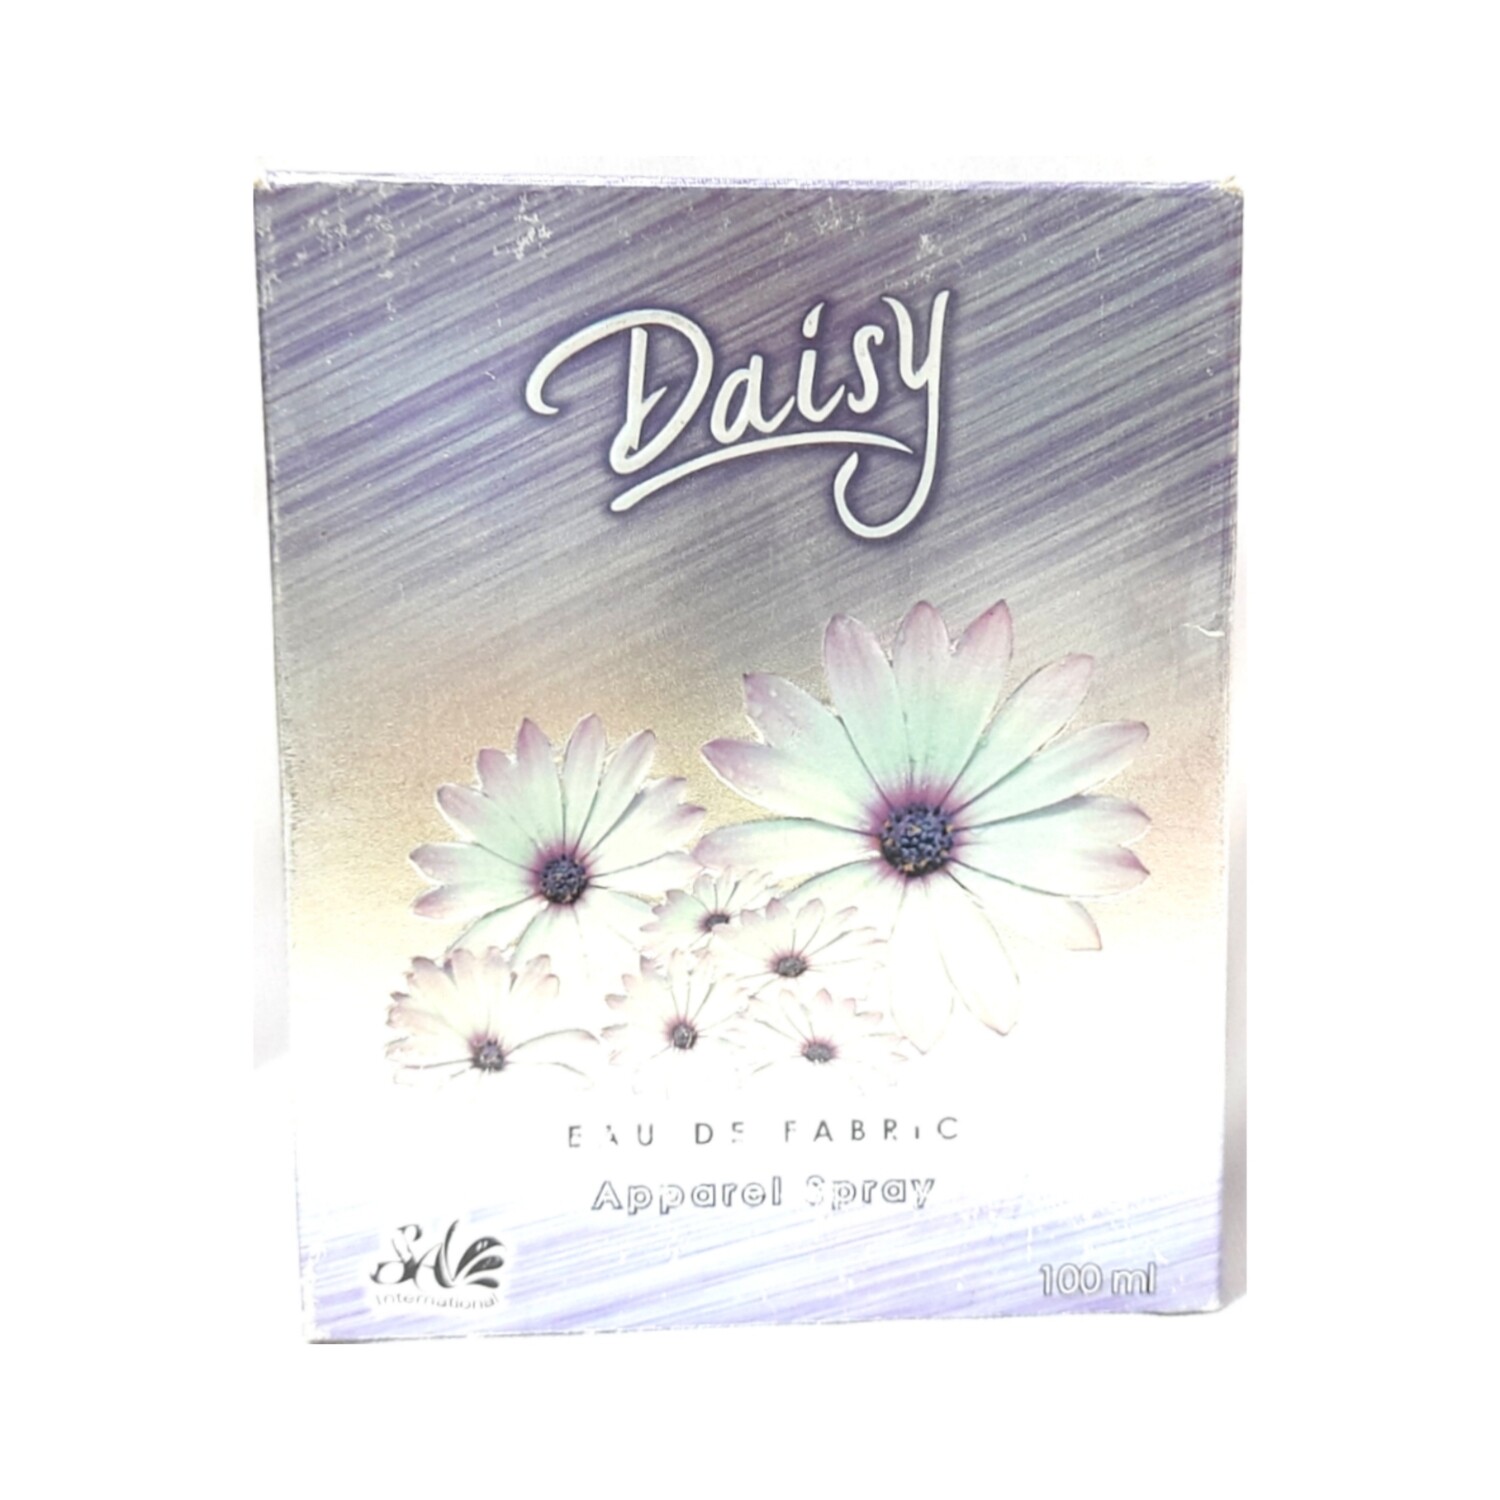 SAV Daisy Apparel Perfume Spray 100 ml